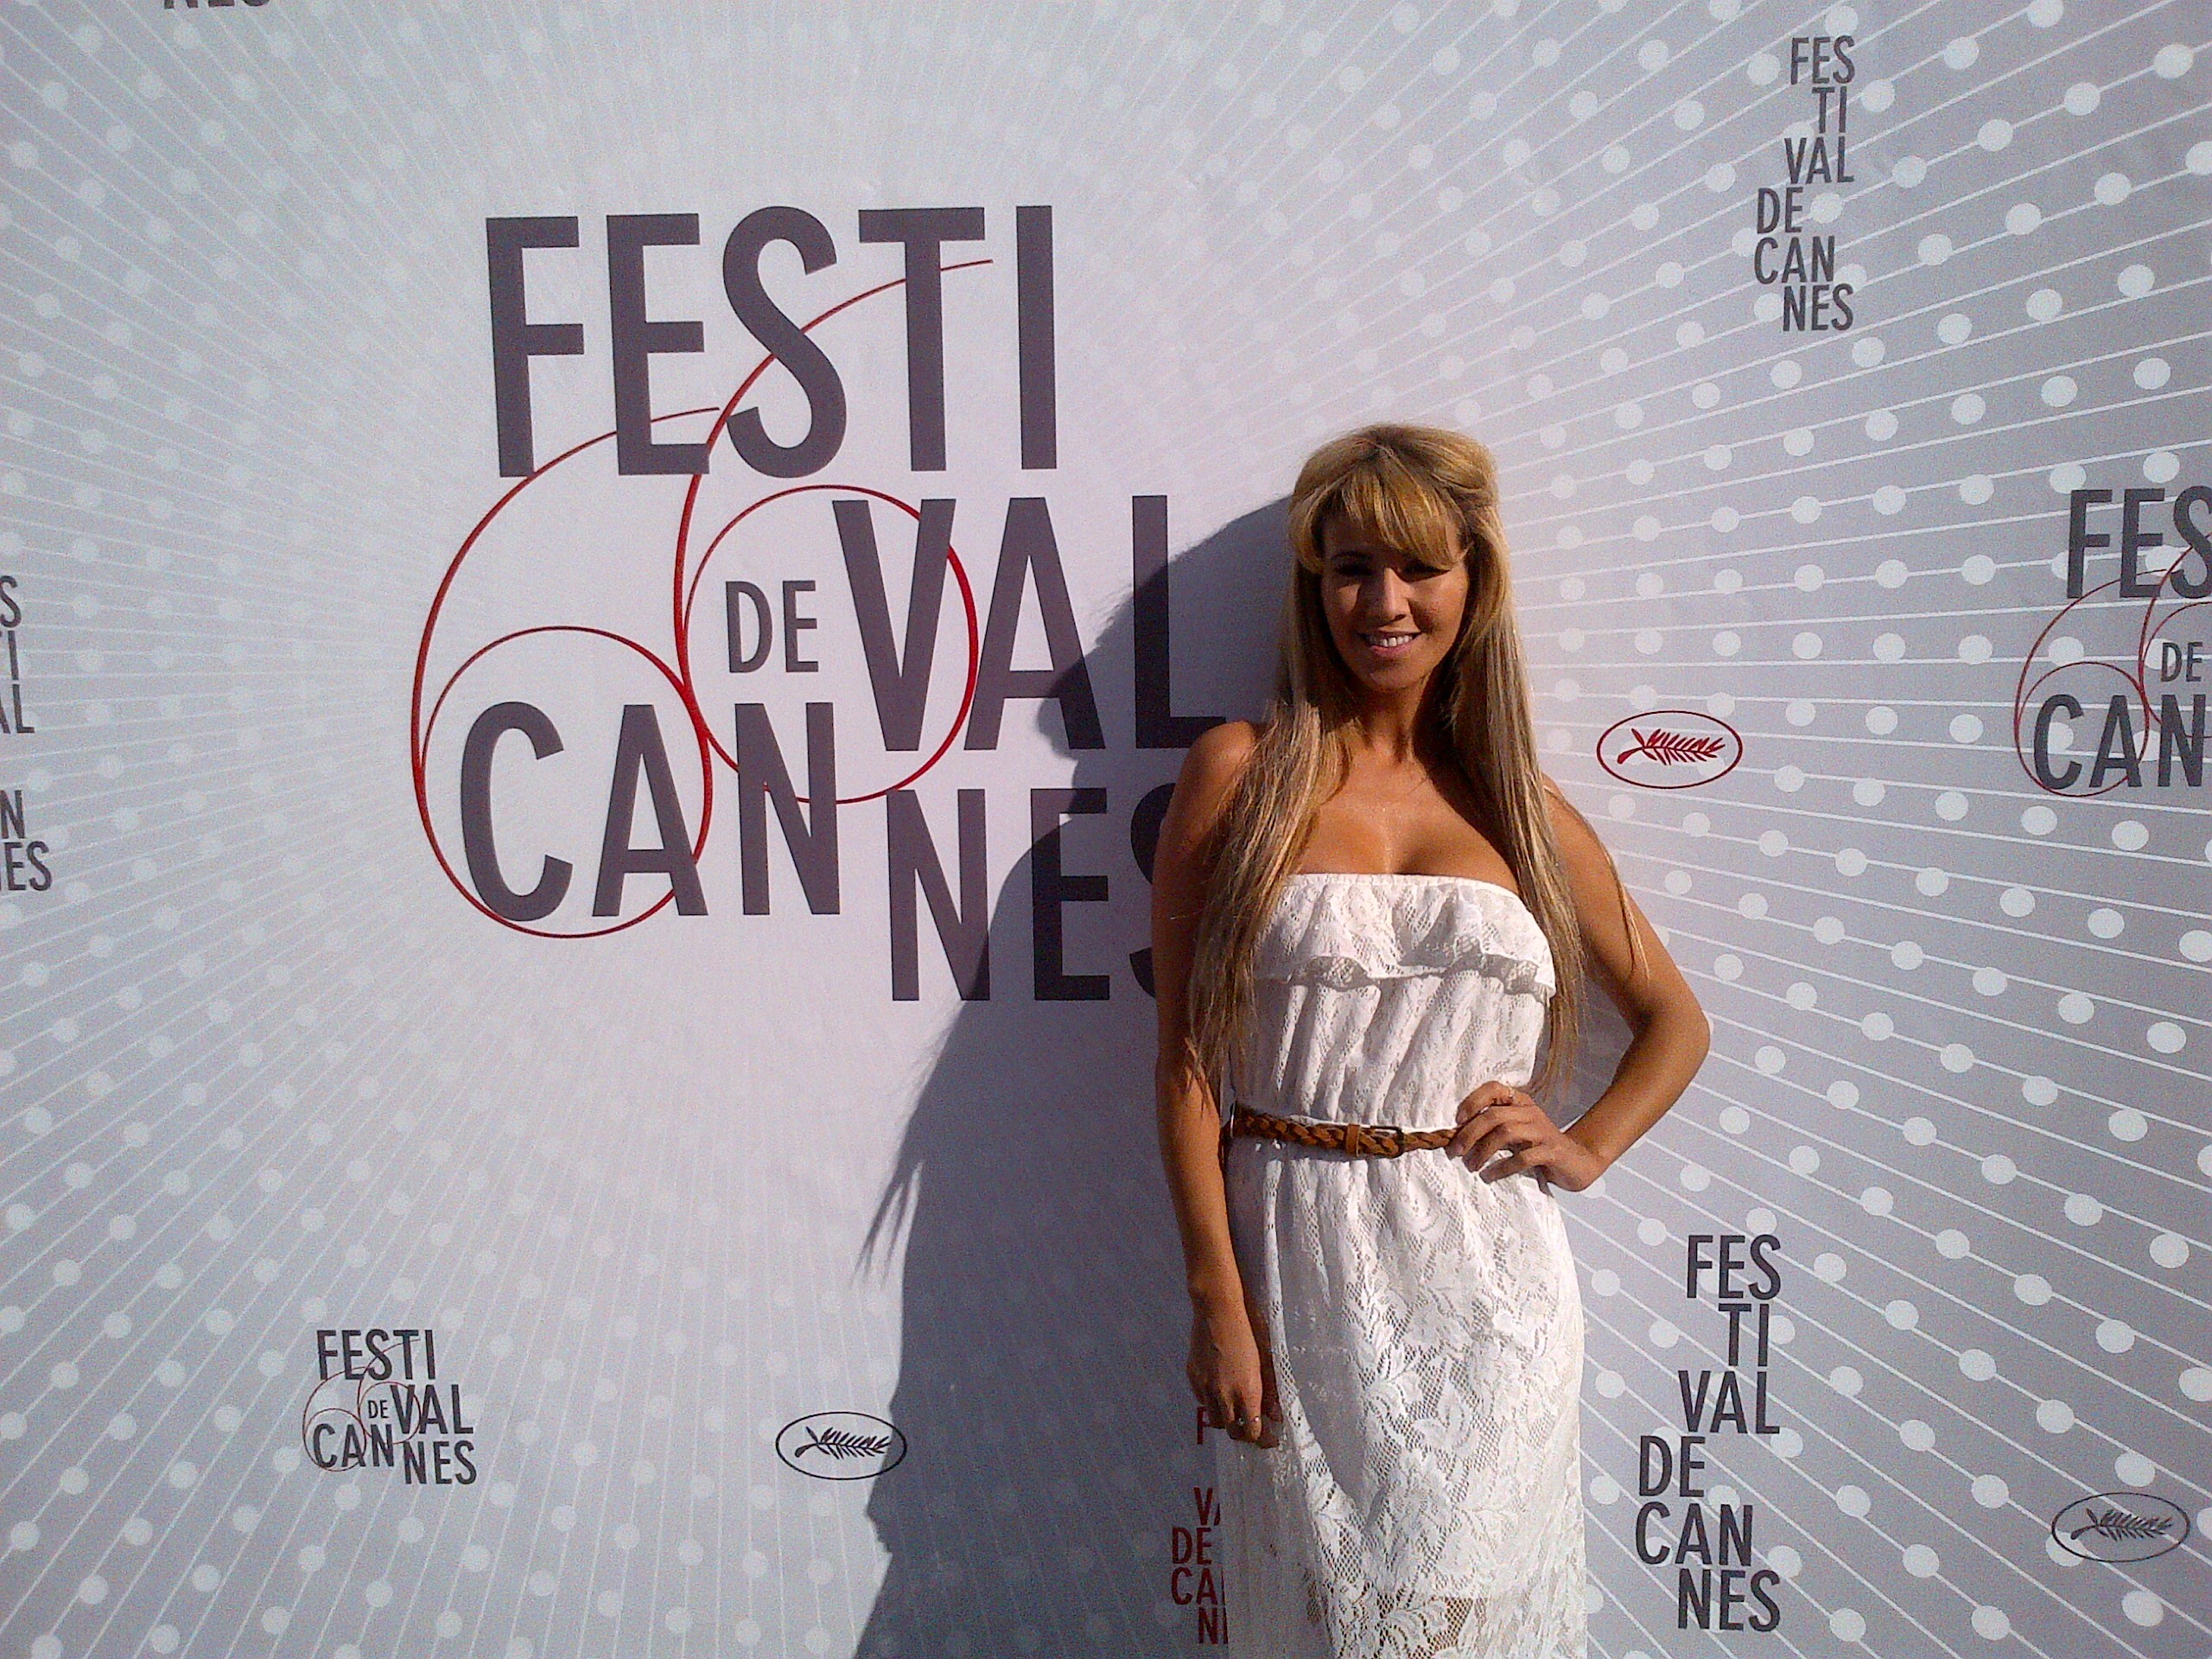 Leila CIANCAGLINI. At Cannes Festival 2013